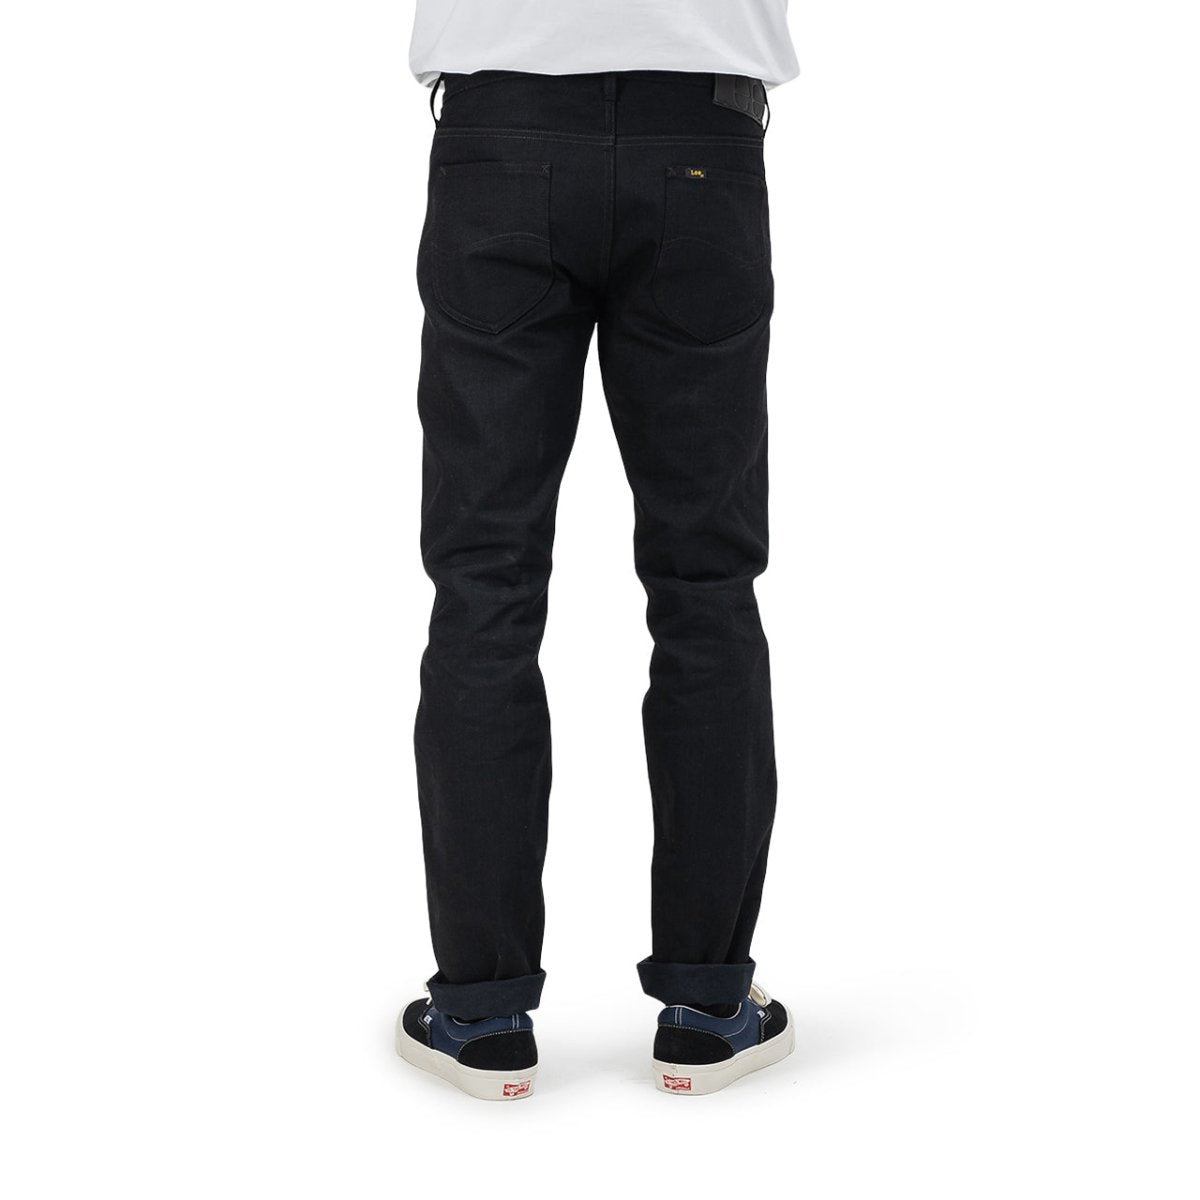 Lee 101 S Dry Regular Jeans (Schwarz)  - Allike Store